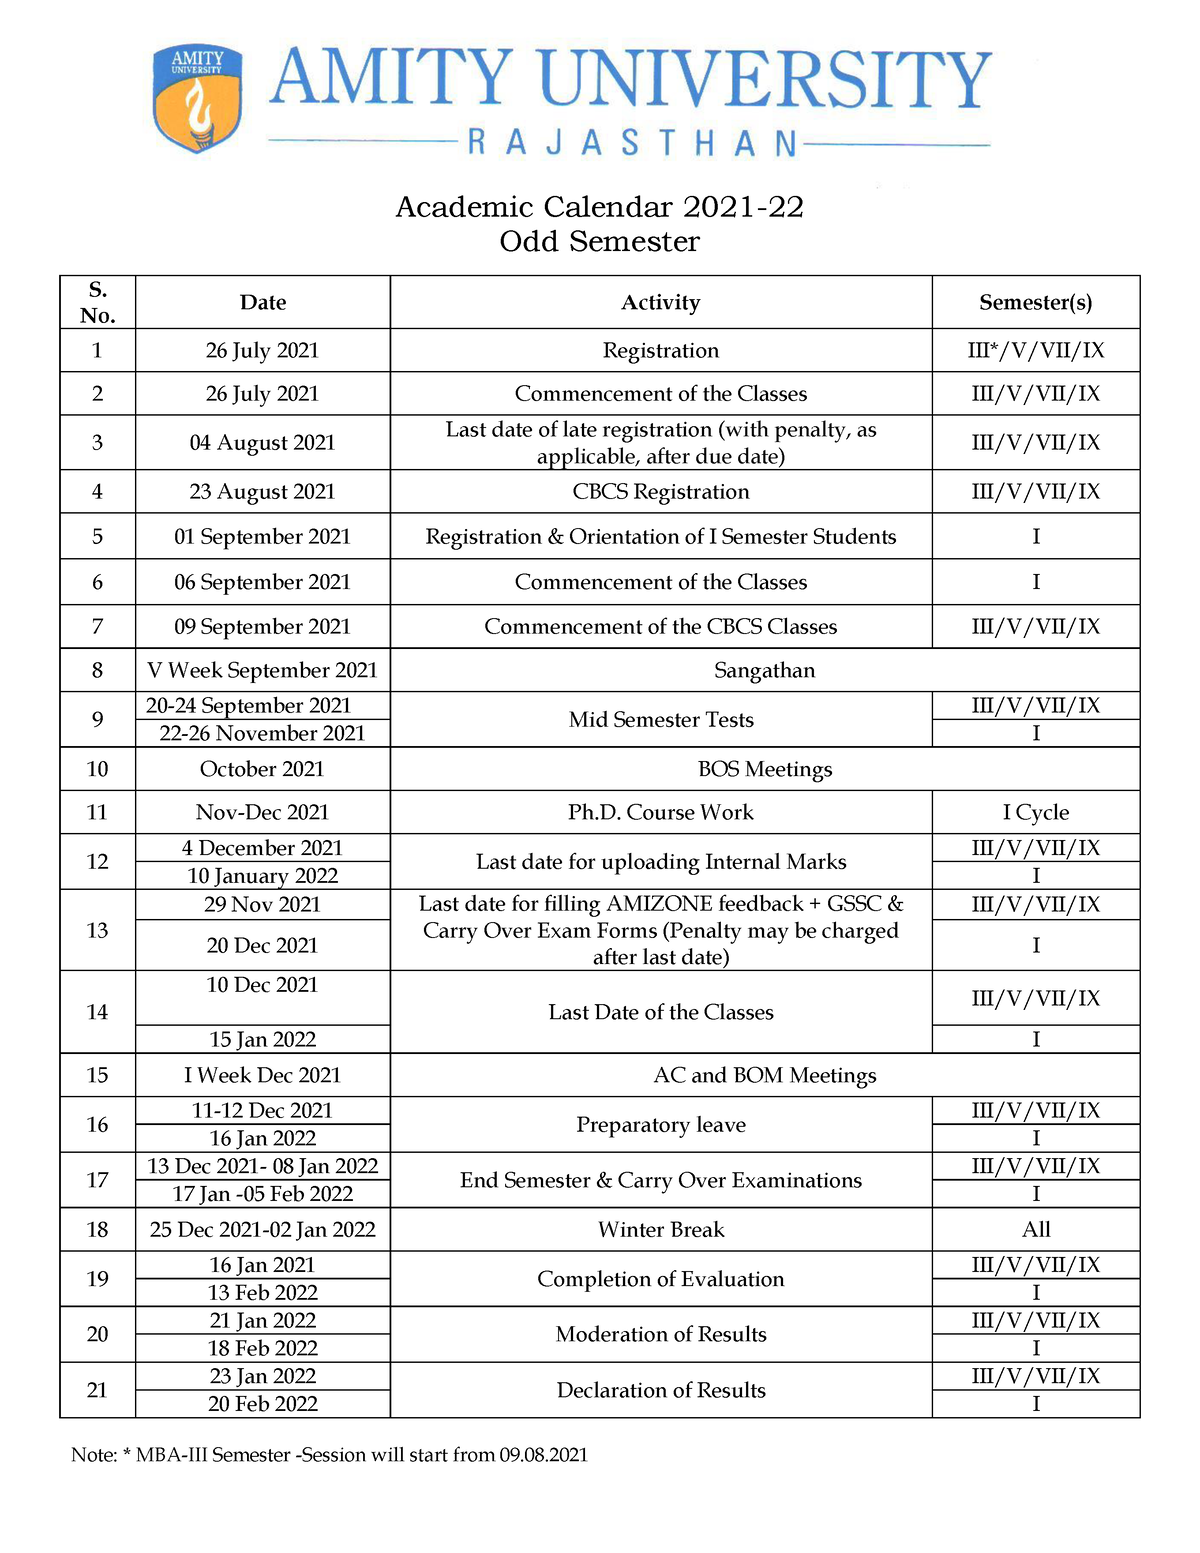 Academic calendar 2021 22 Academic Calendar 2021 Odd Semester Note